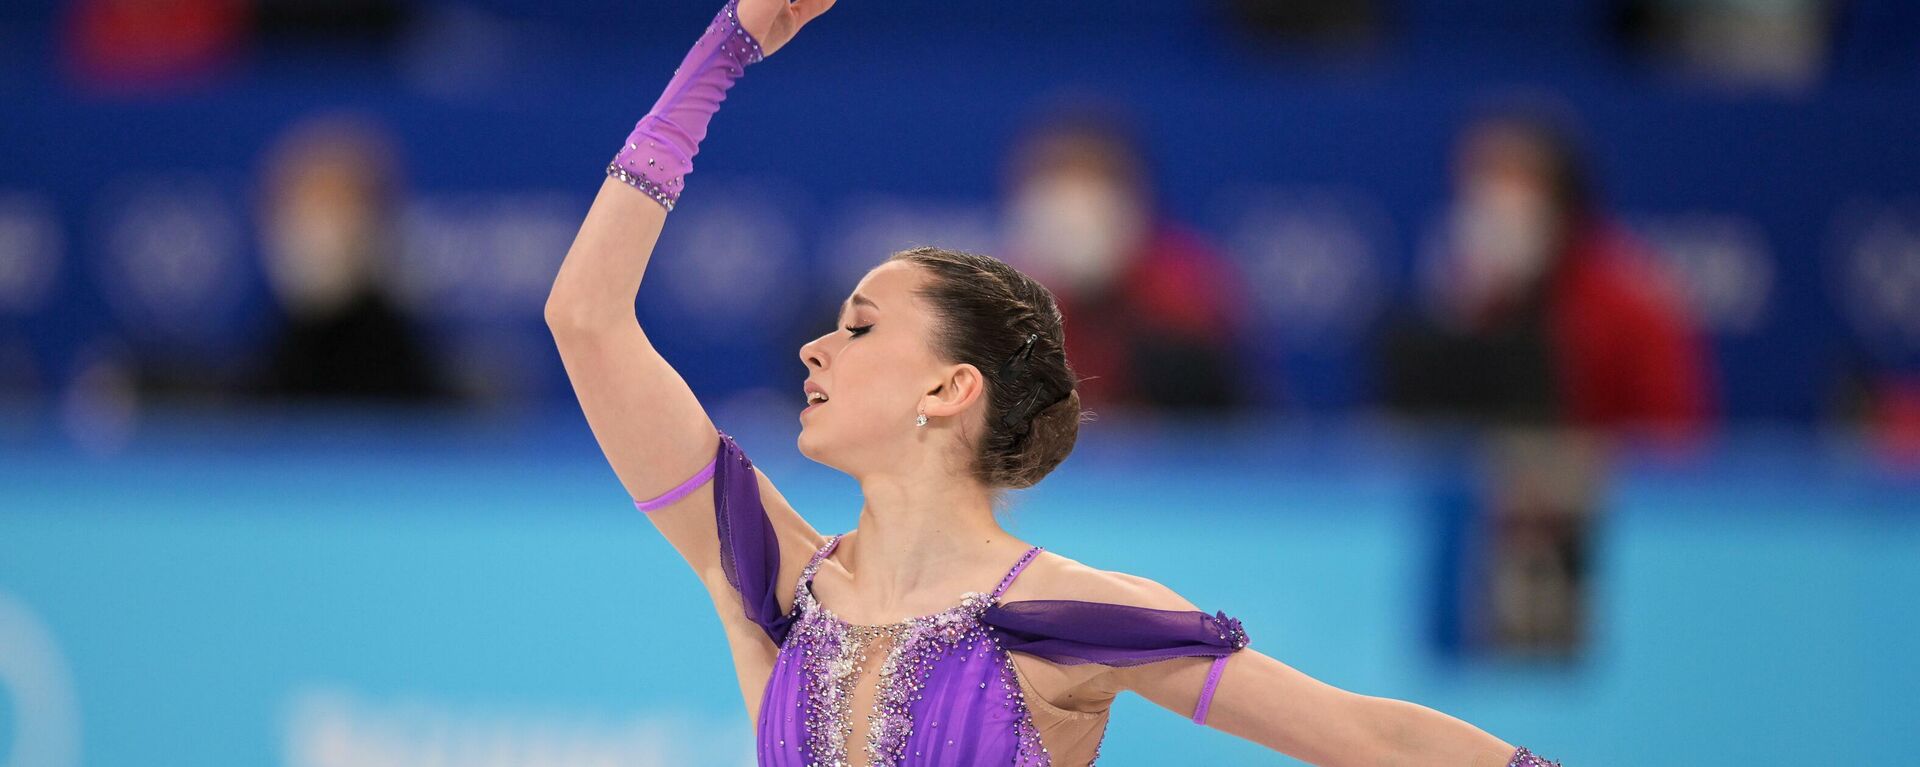 Russian skater Kamila Valieva performs her short program at the 2022 Olympic Games in Beijing - Sputnik International, 1920, 08.02.2022